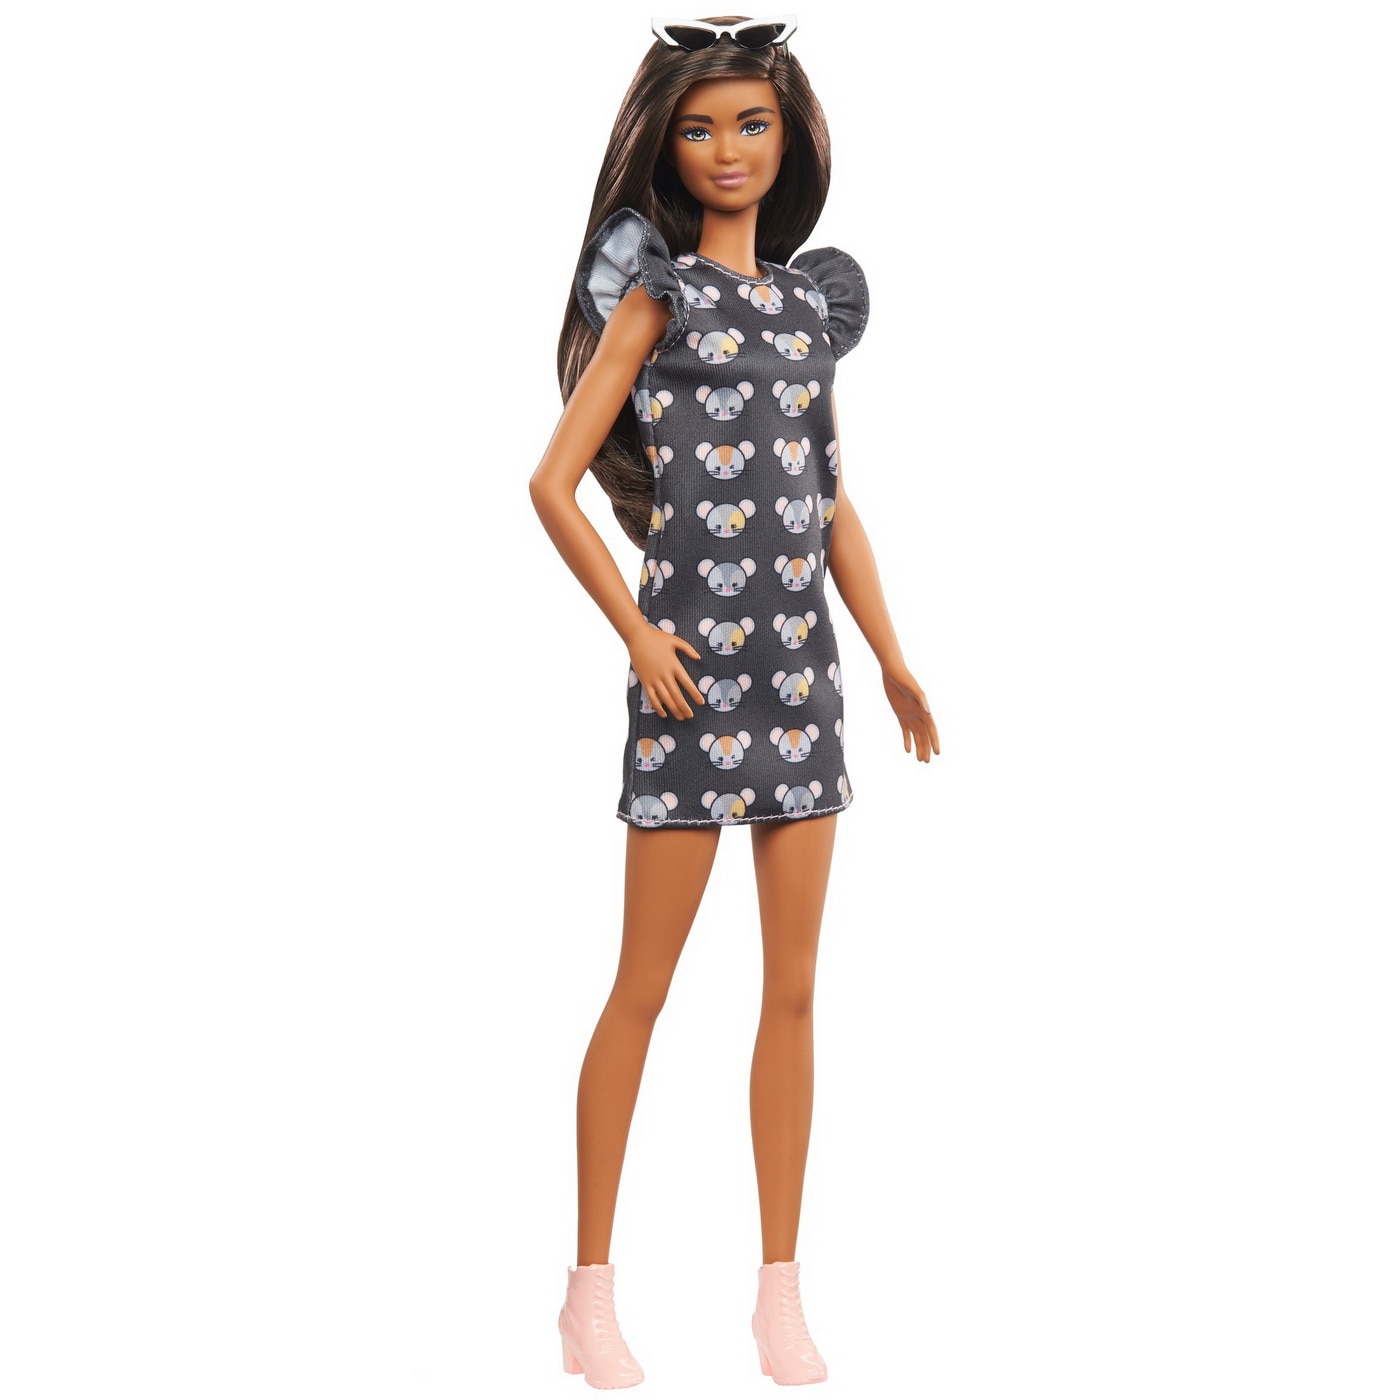 Papusa Barbie Fashionistas - Barbie bruneta, cu rochita mouse print -